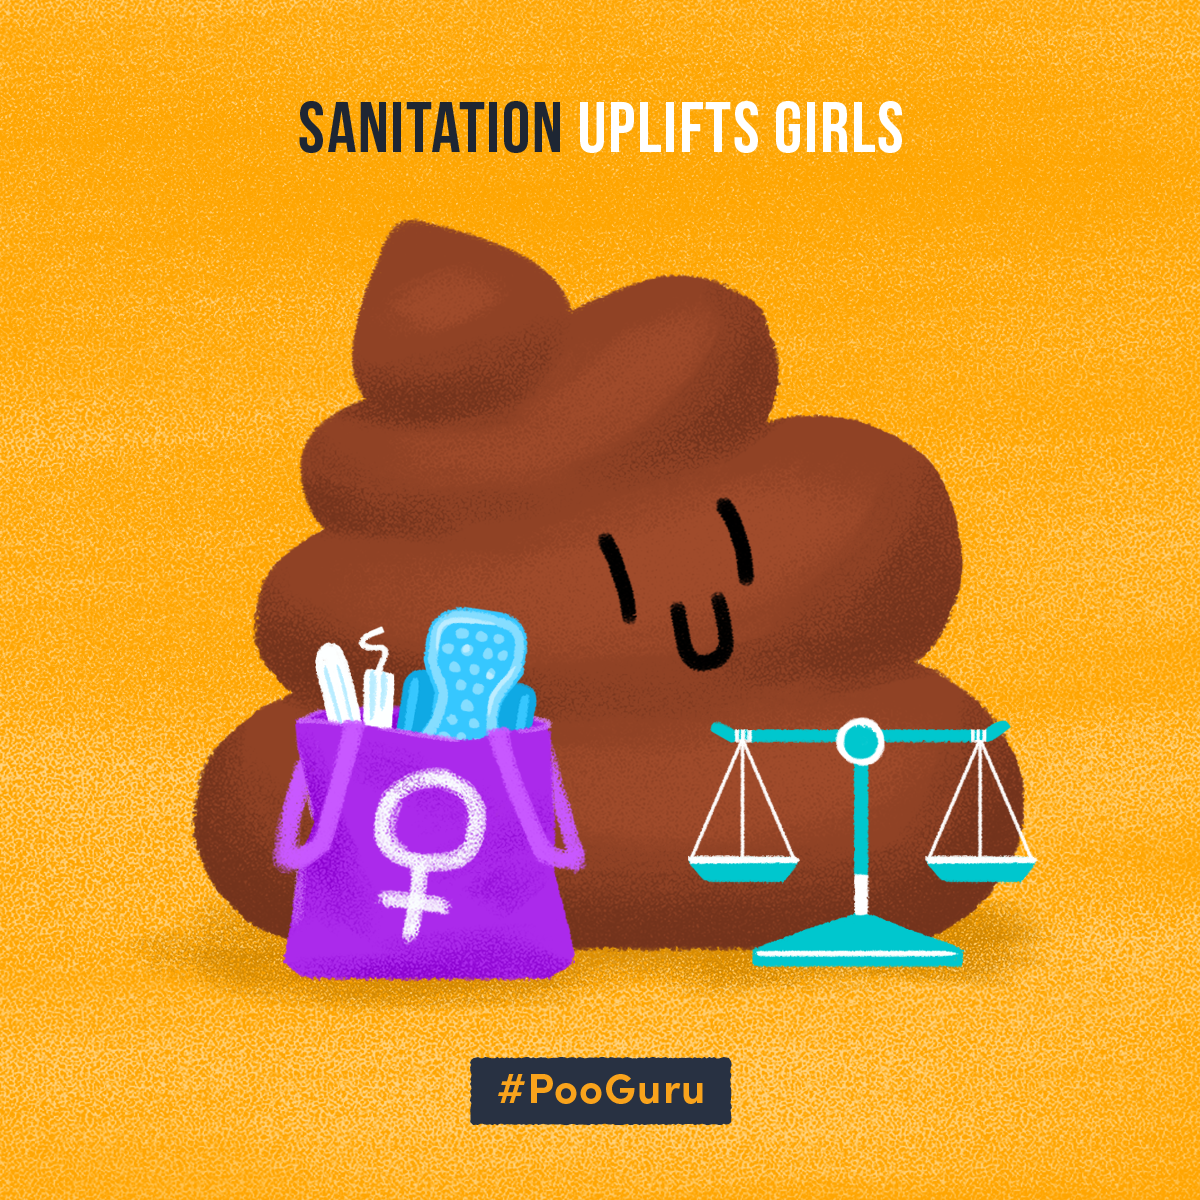 Sanitatio uplifts girls